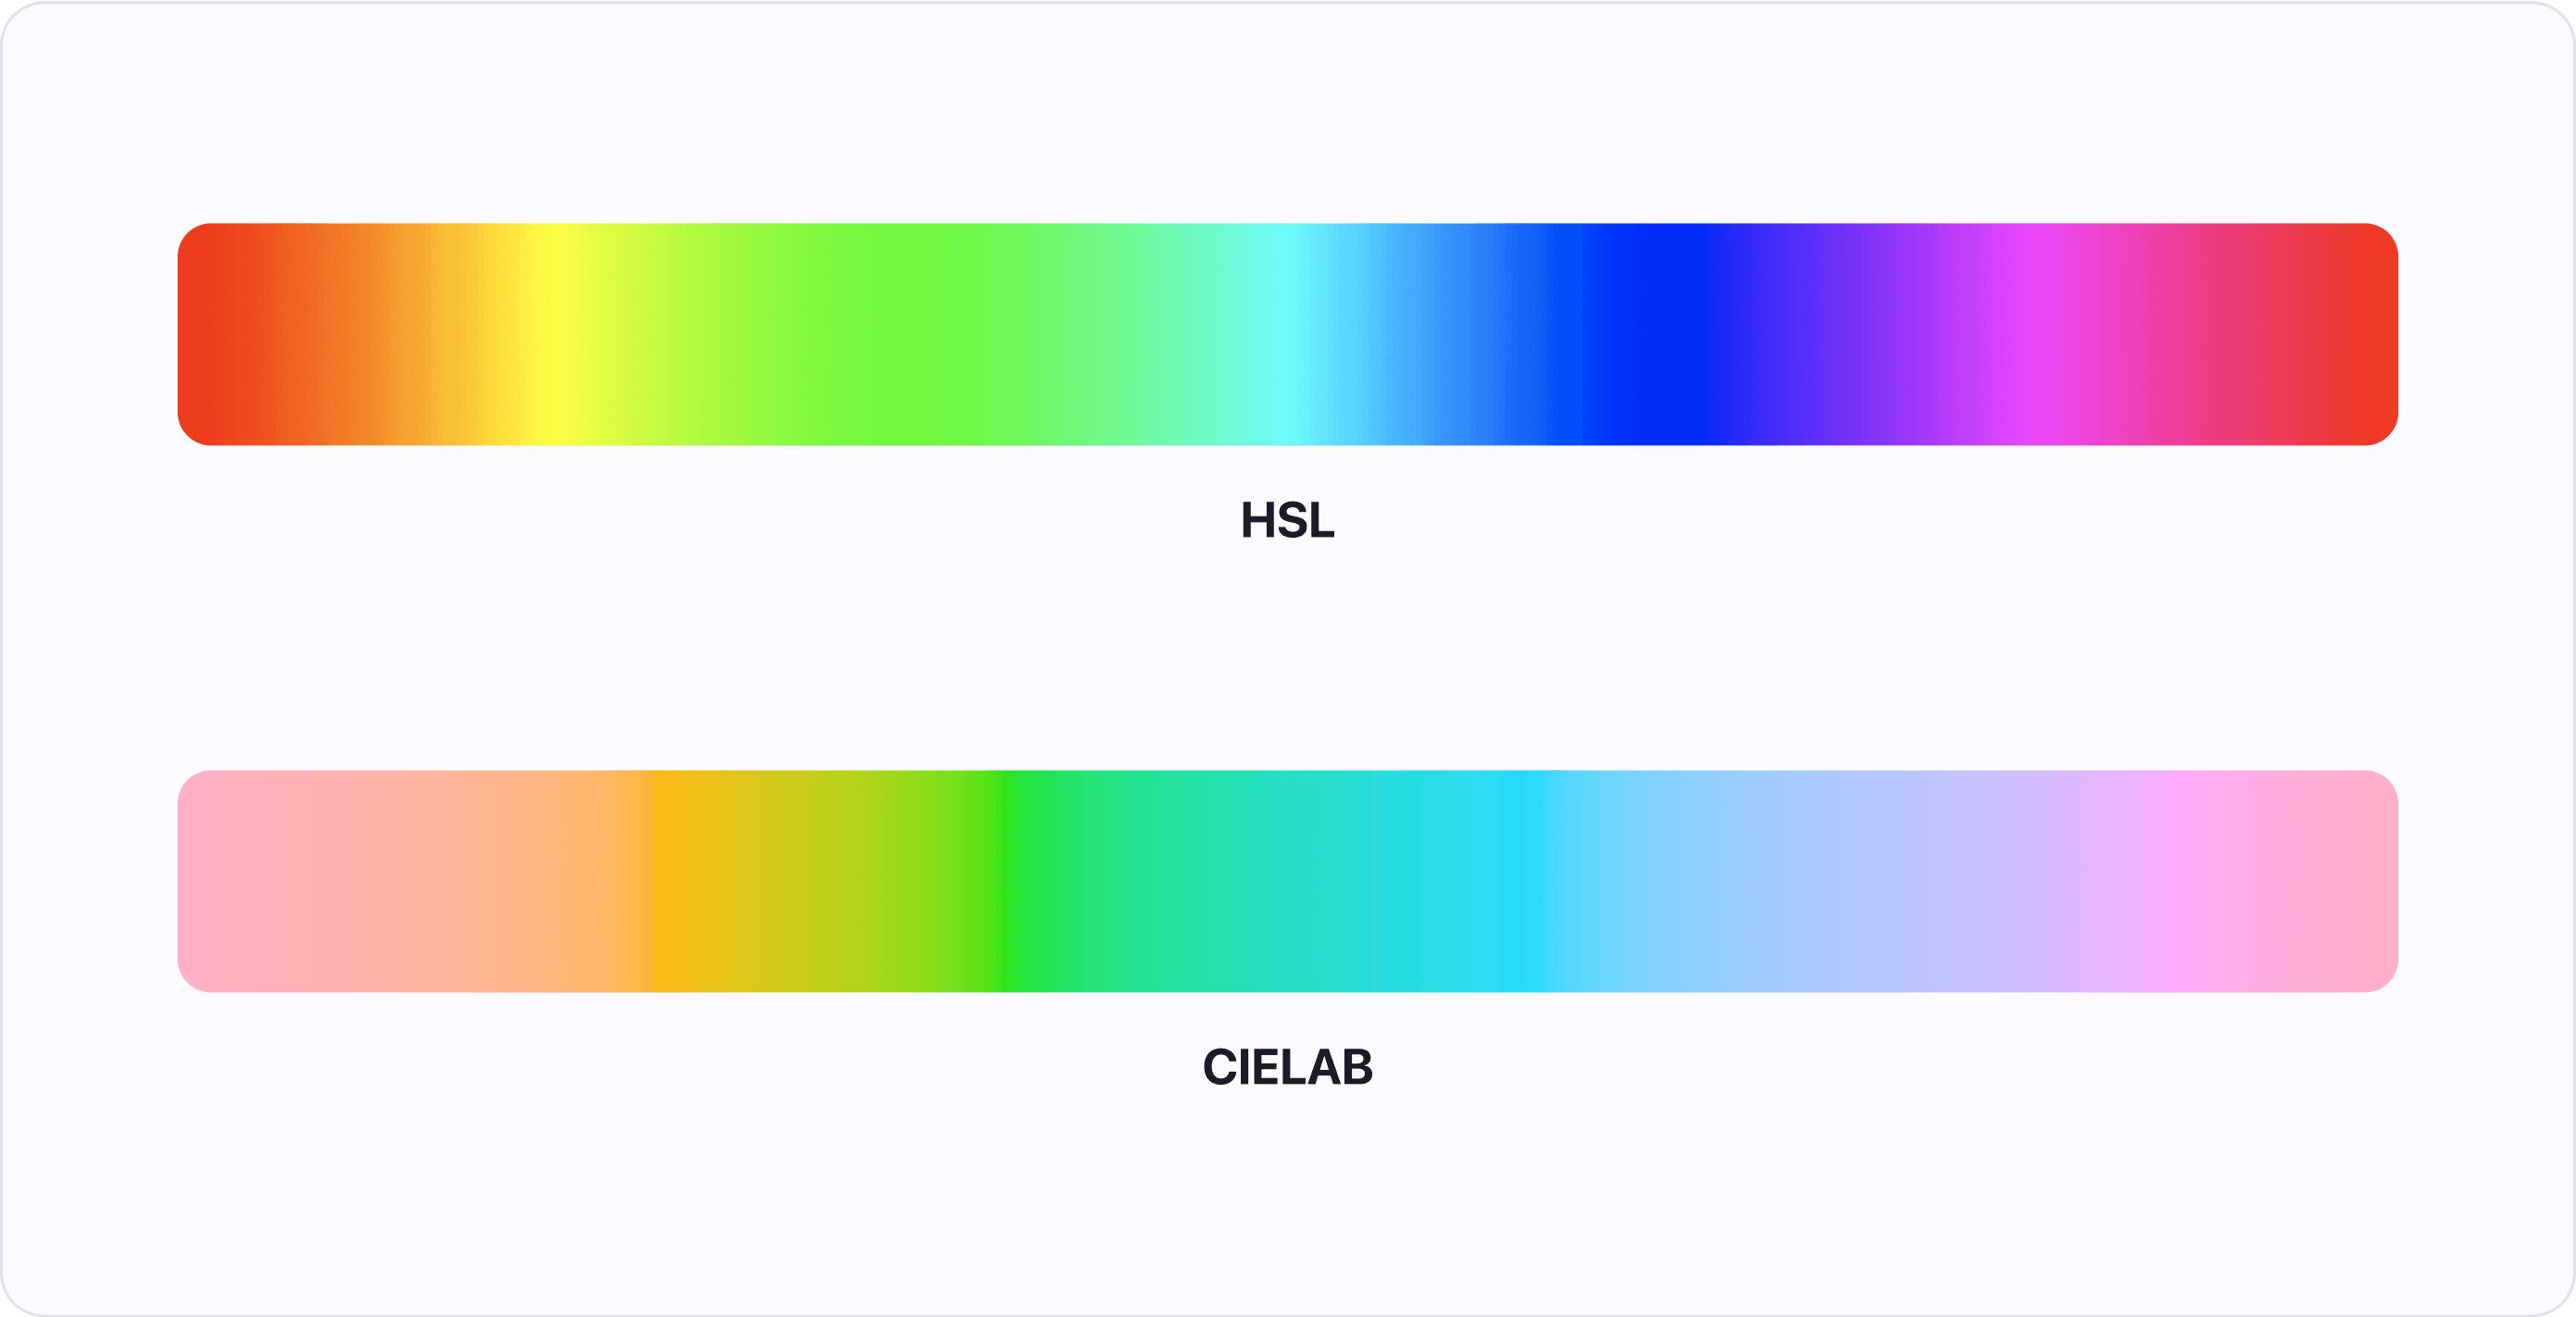 Comparison of HSL and CIELAB color spaces hue values